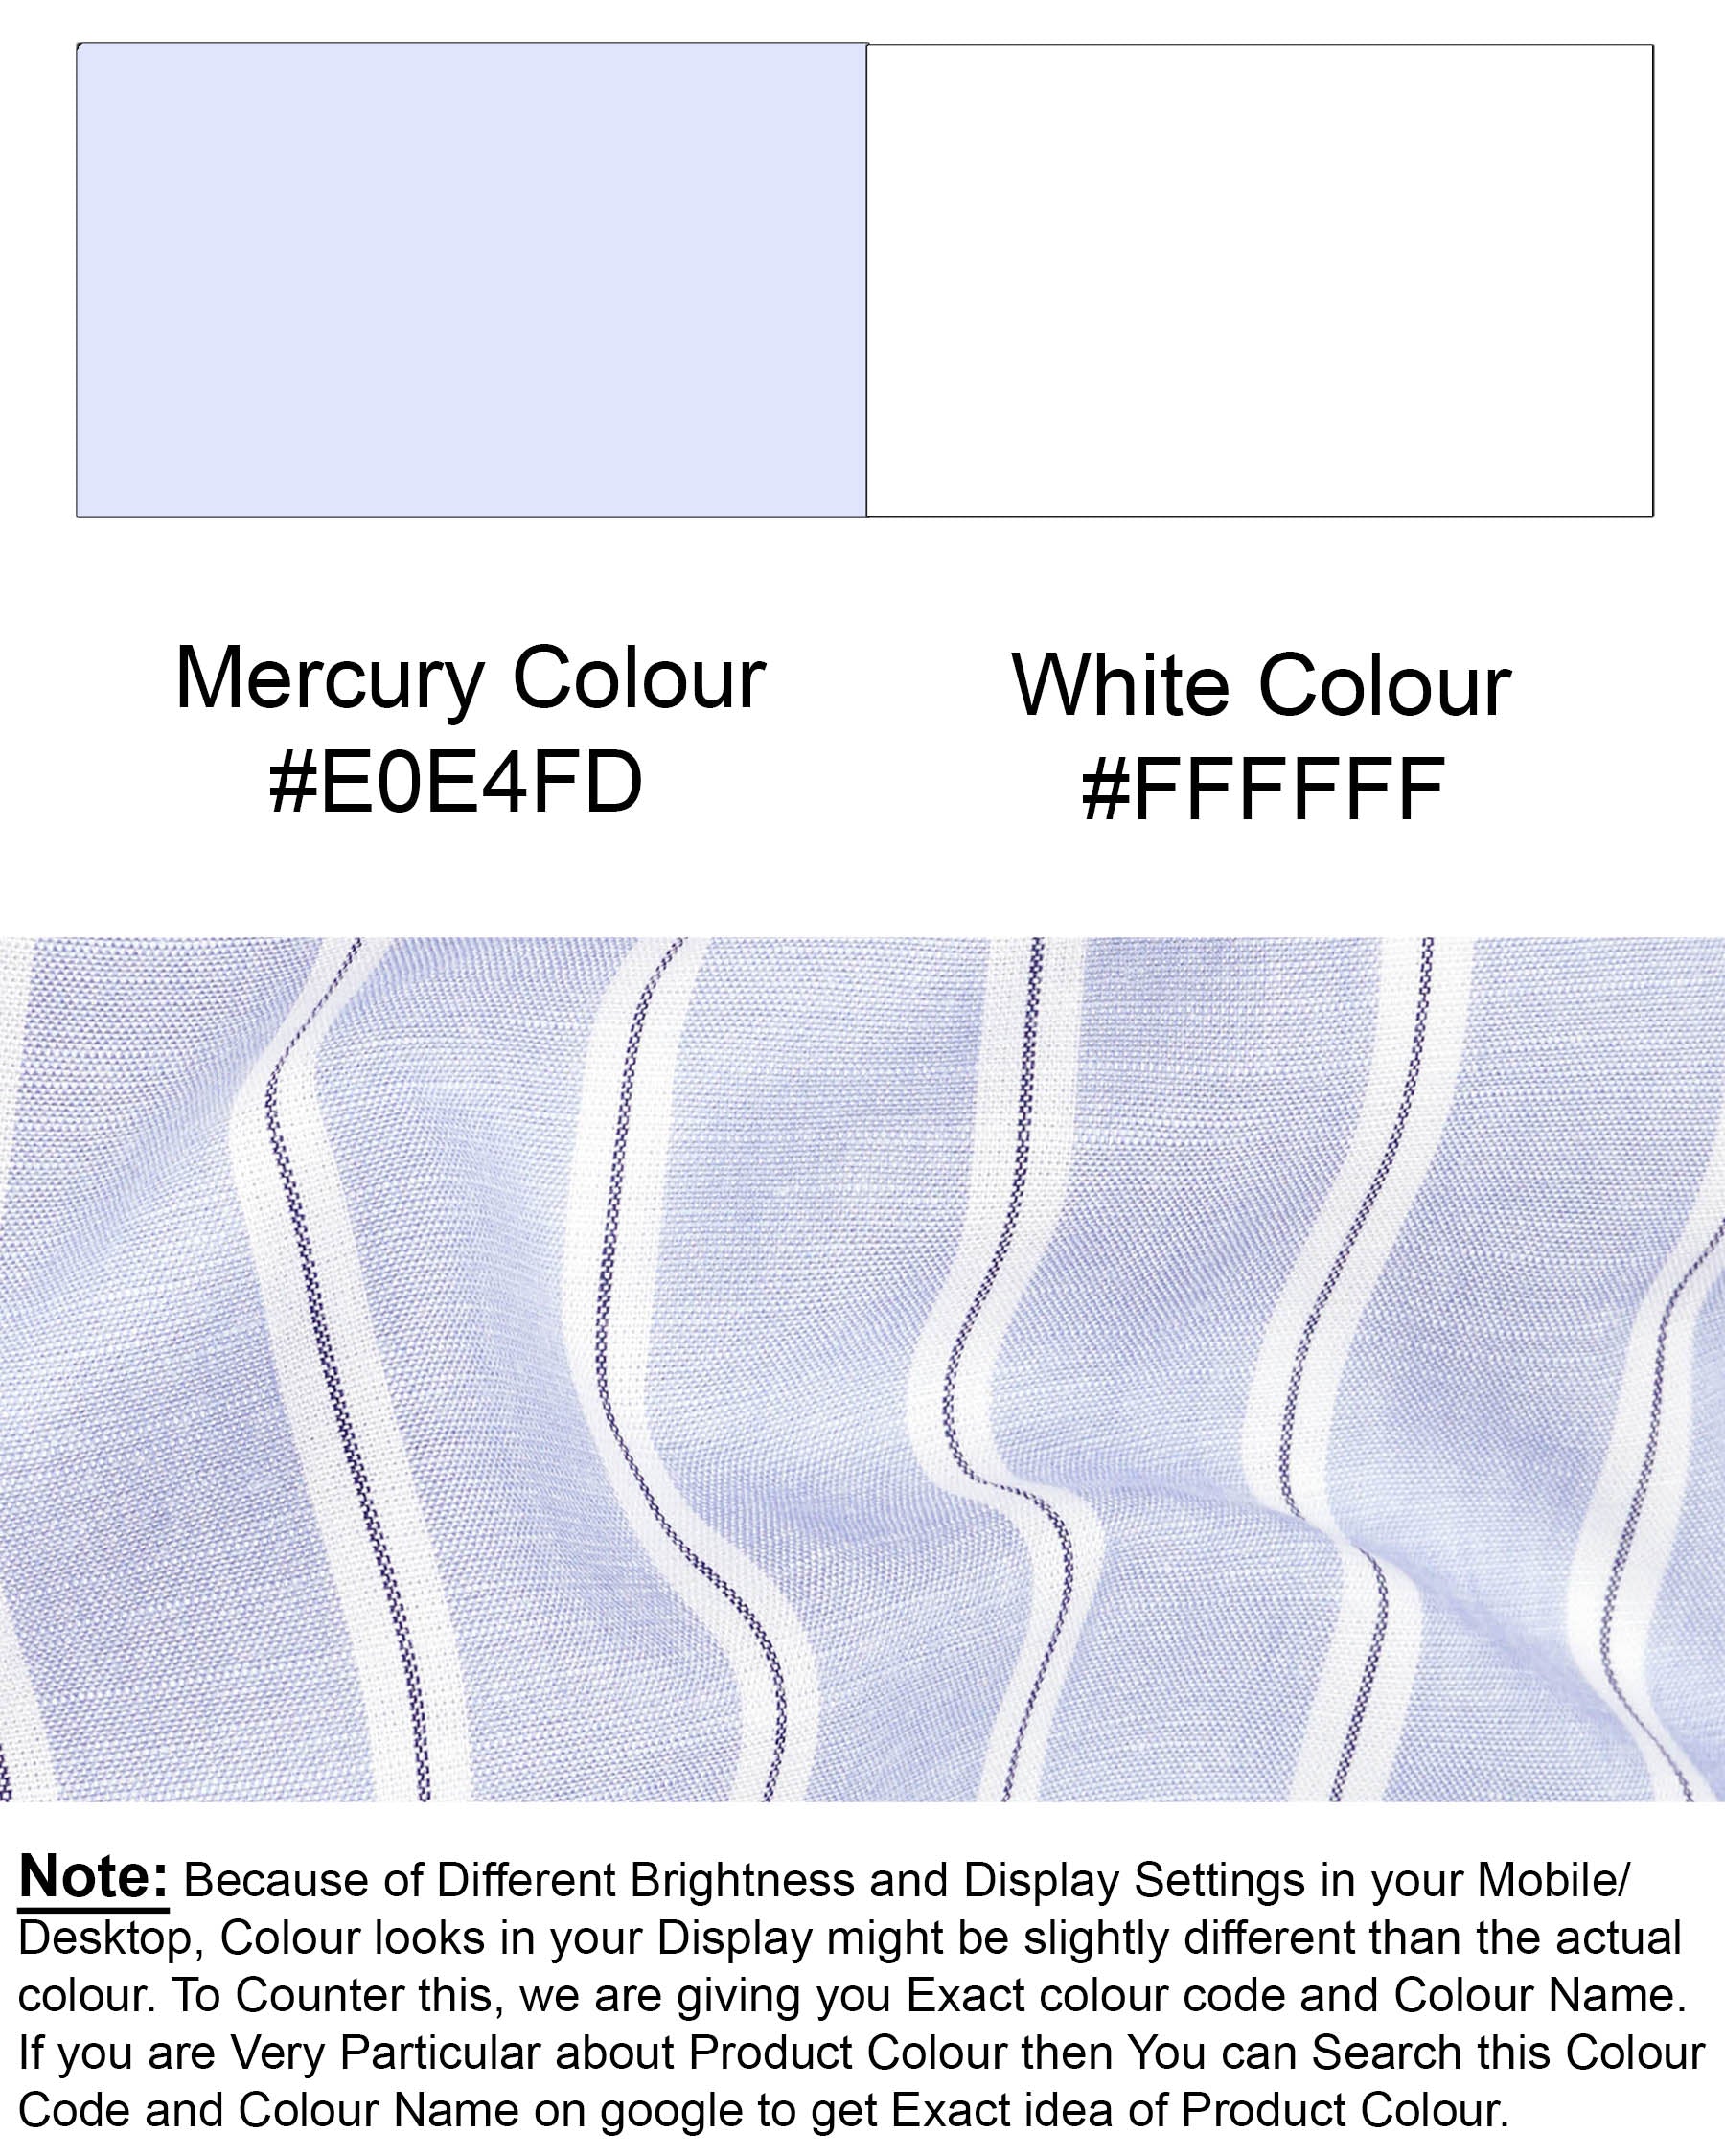 Mercury Blue with White Vertical Striped Twill Premium Cotton Shirt 7572-38,7572-38,7572-39,7572-39,7572-40,7572-40,7572-42,7572-42,7572-44,7572-44,7572-46,7572-46,7572-48,7572-48,7572-50,7572-50,7572-52,7572-52